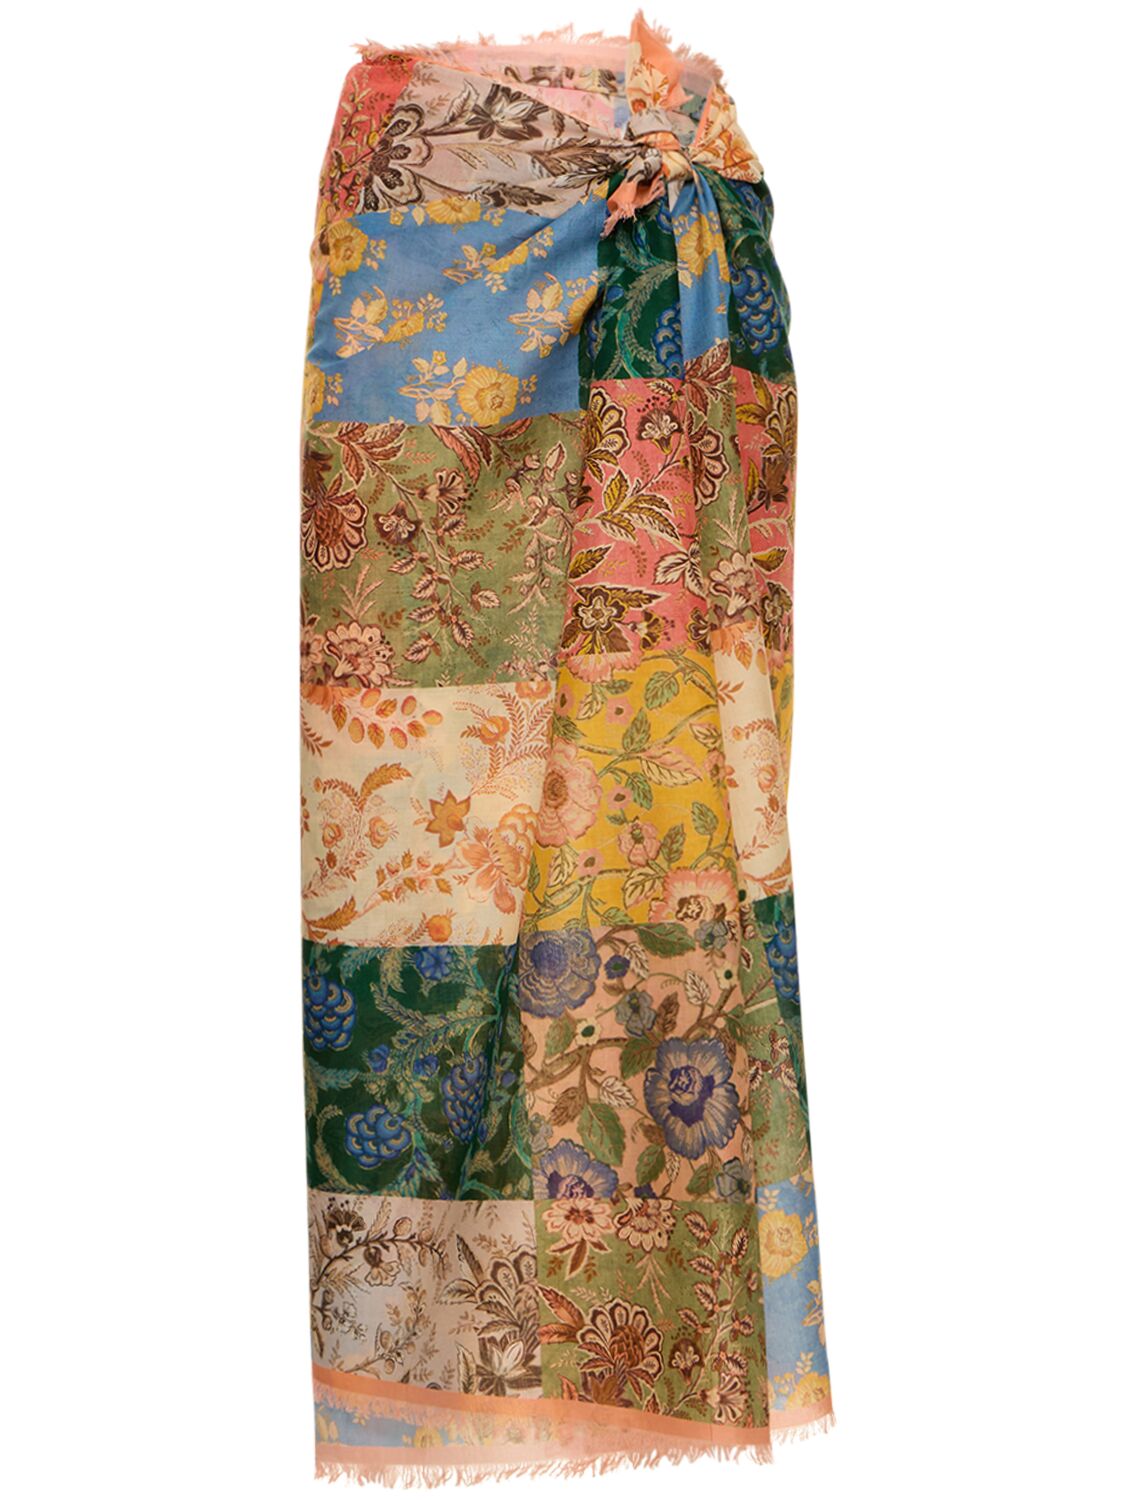 Image of Printed Cotton Pareo Skirt